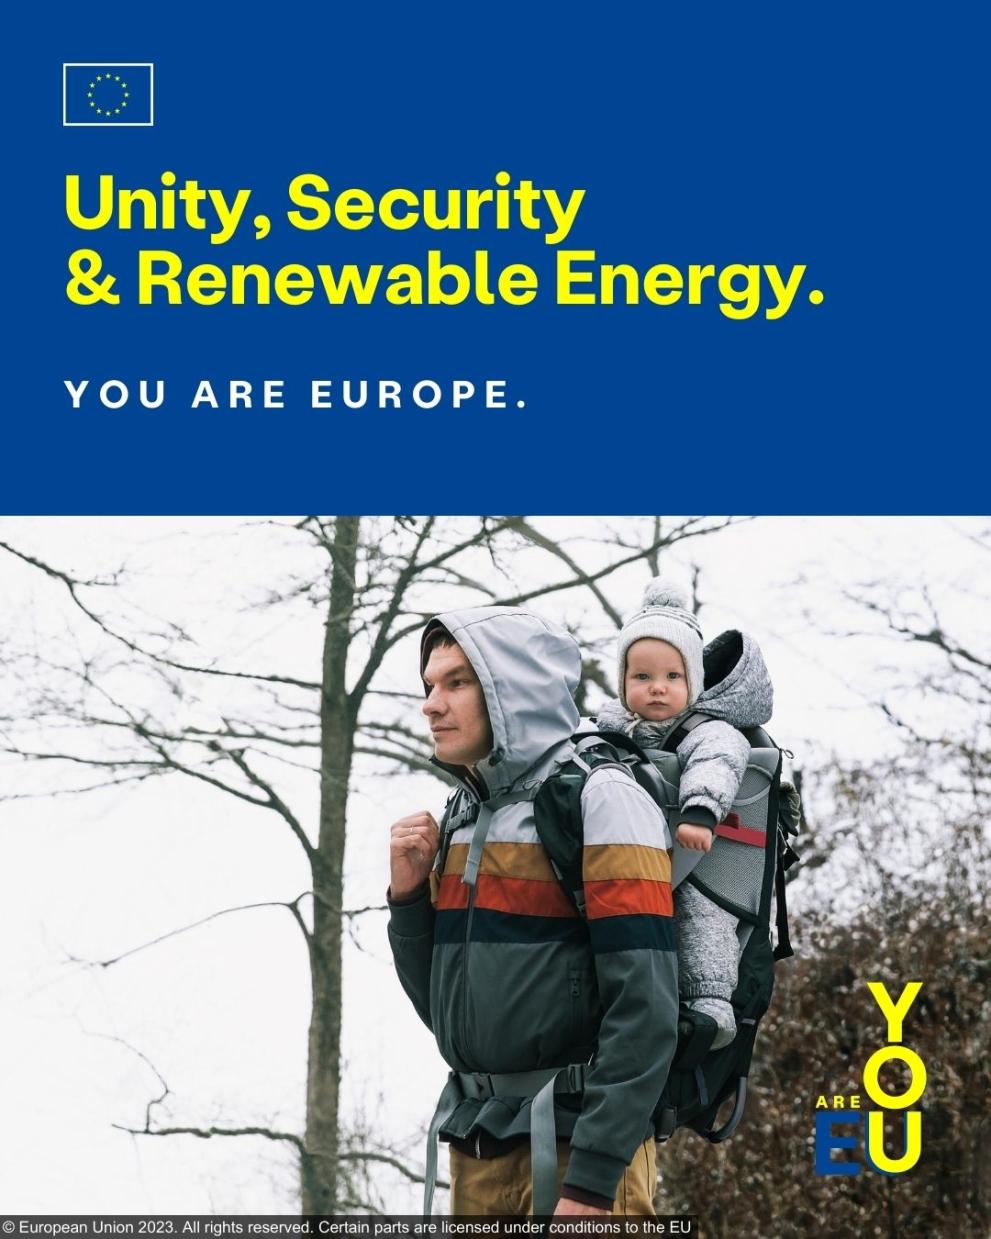 Unity, Security and Renewable Energy.